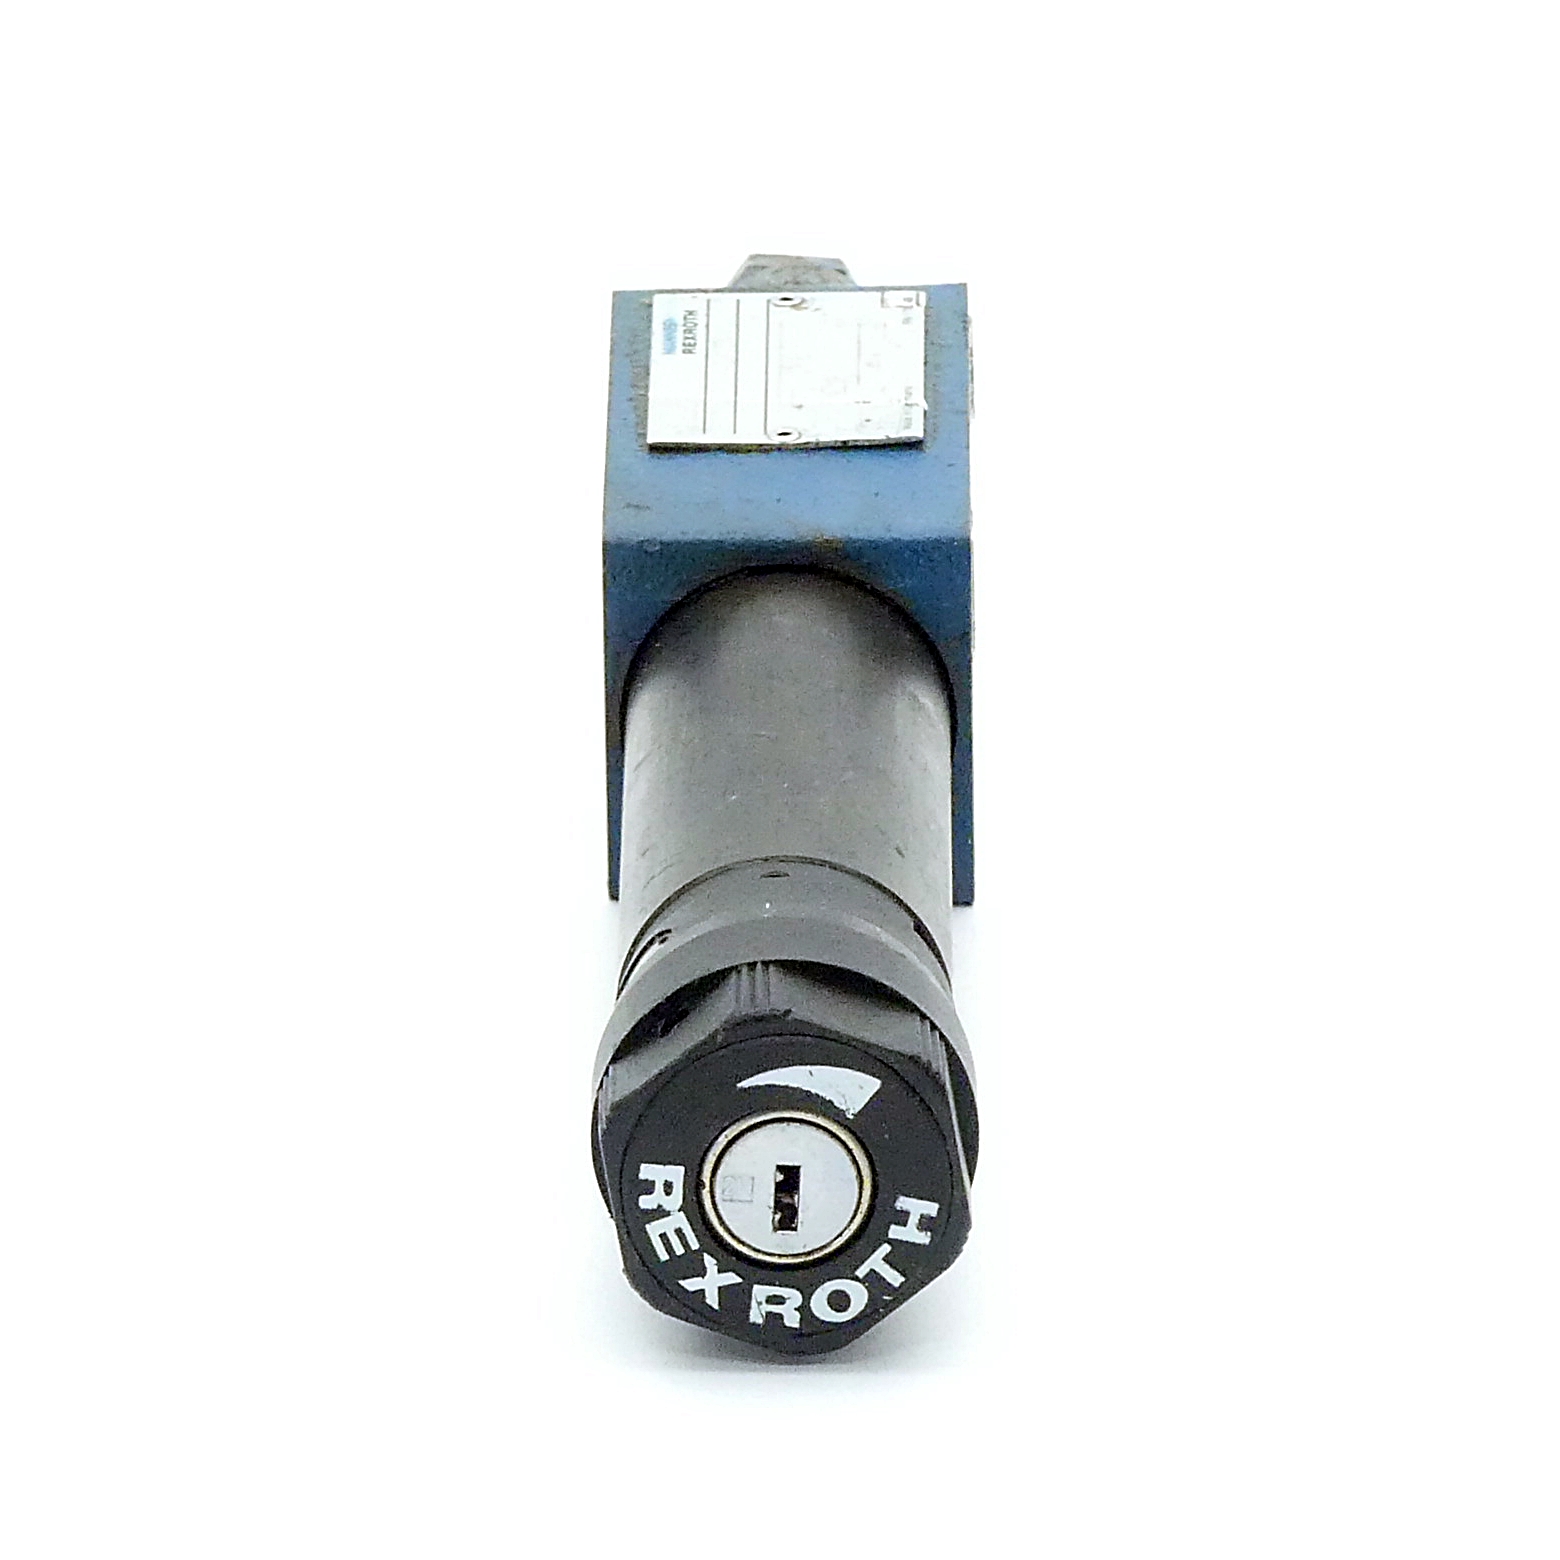 Pressure control valve ZDR 6 DP3-42/75YM 